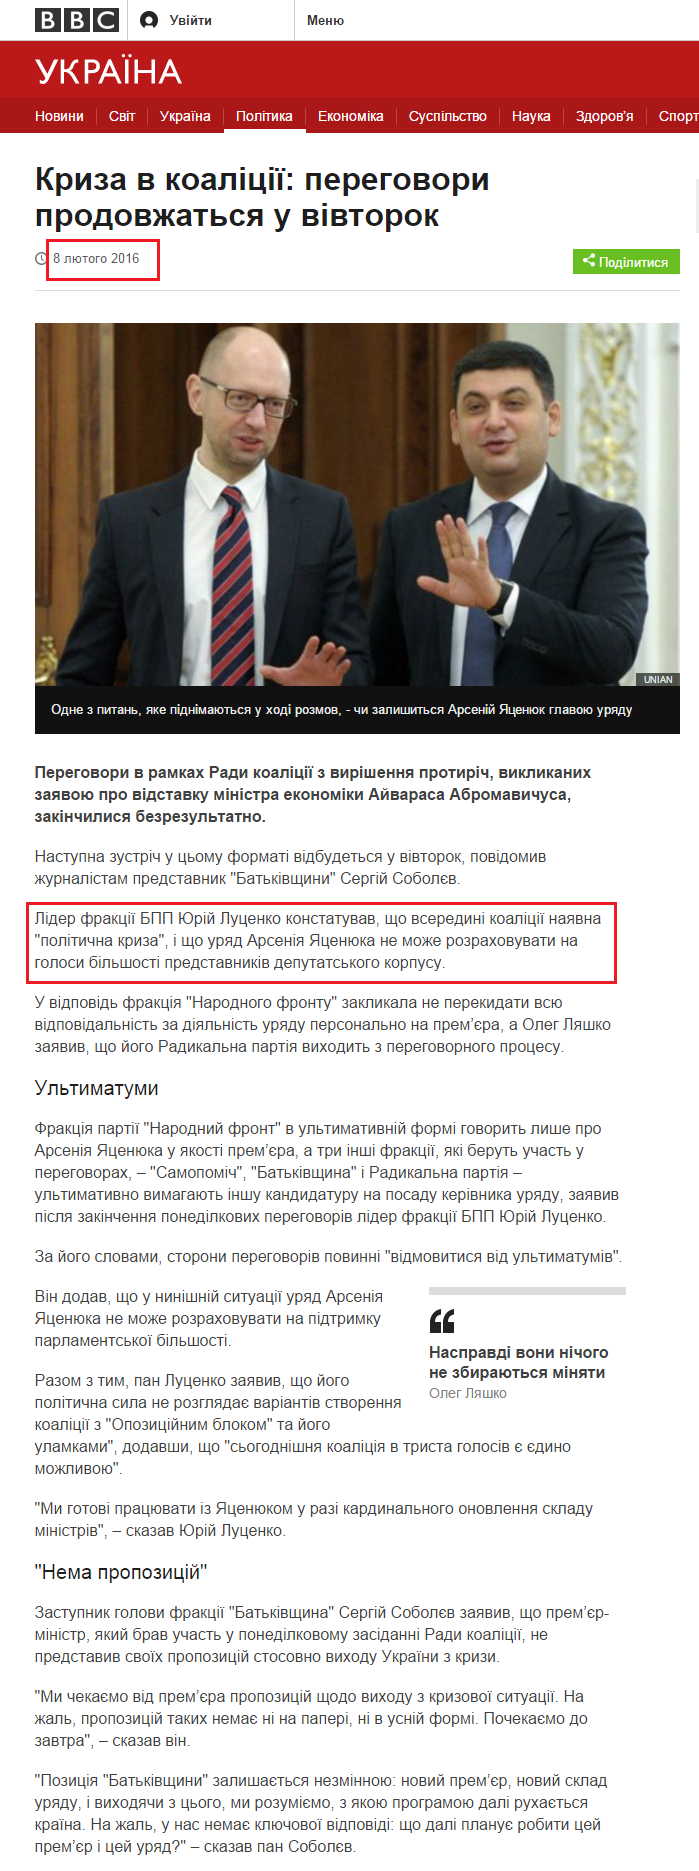 http://www.bbc.com/ukrainian/politics/2016/02/160208_monday_coalition_crisis_sx